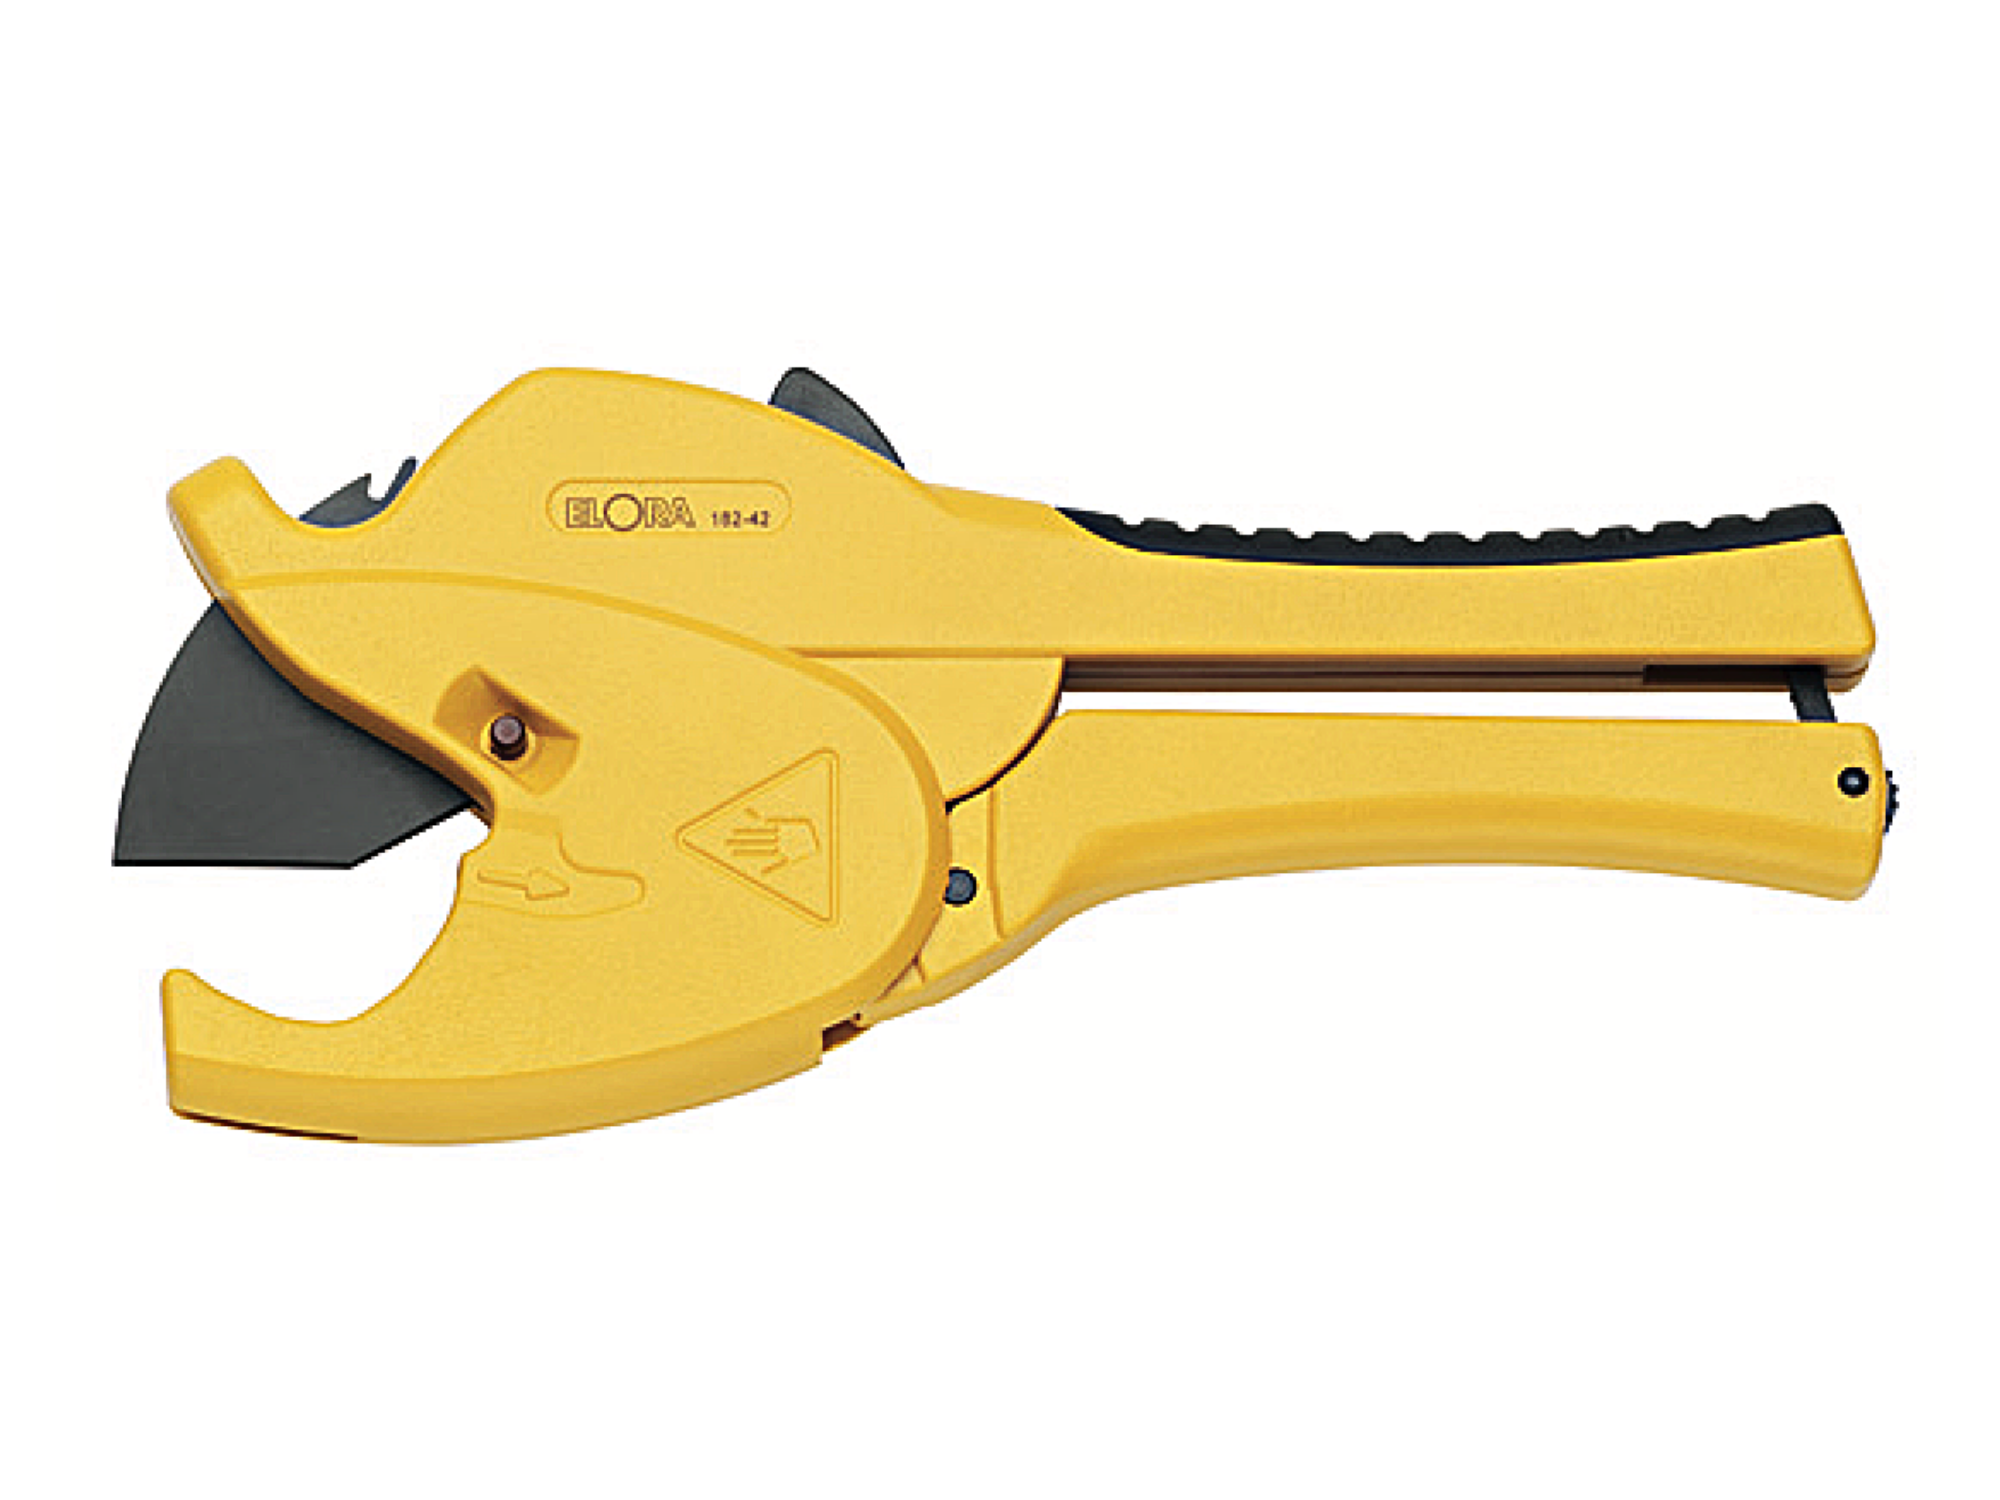 ELORA 182-42 Plastic Pipe Cutter/Scissors 0-42 mm (ELORA Tools) - Premium Pipe Cutter from ELORA - Shop now at Yew Aik.